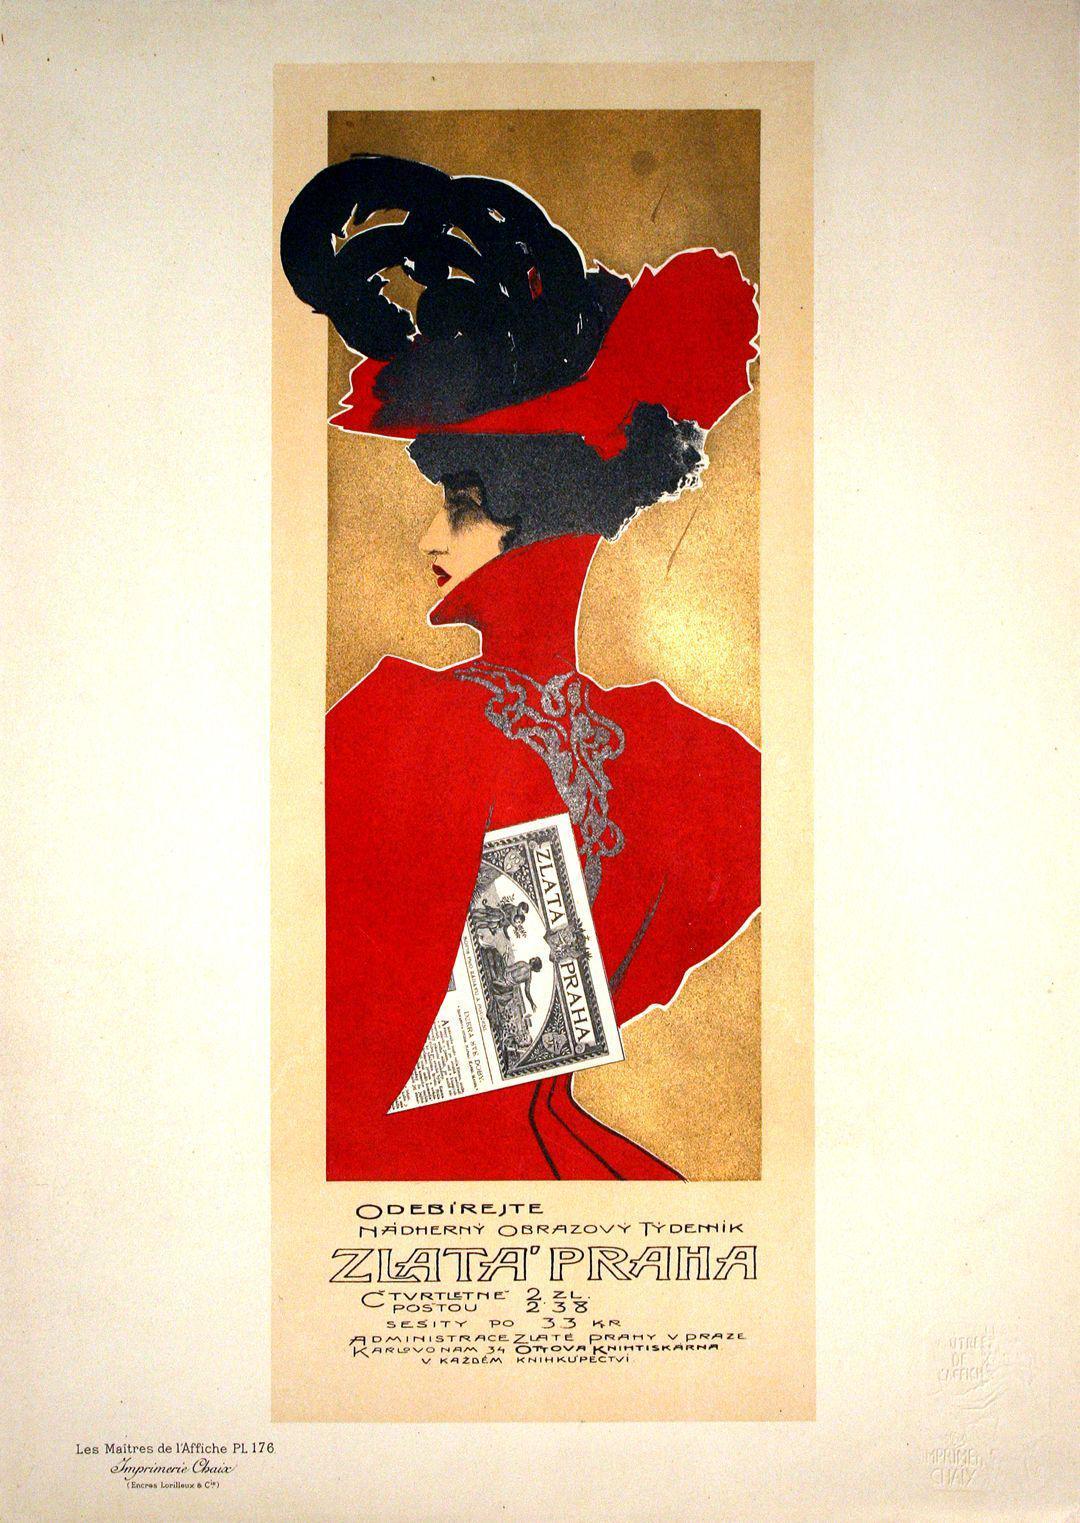 Original Maitres de L'Affiche Poster PL 176 - Zlata Praha by Vaclav Olivia 1899